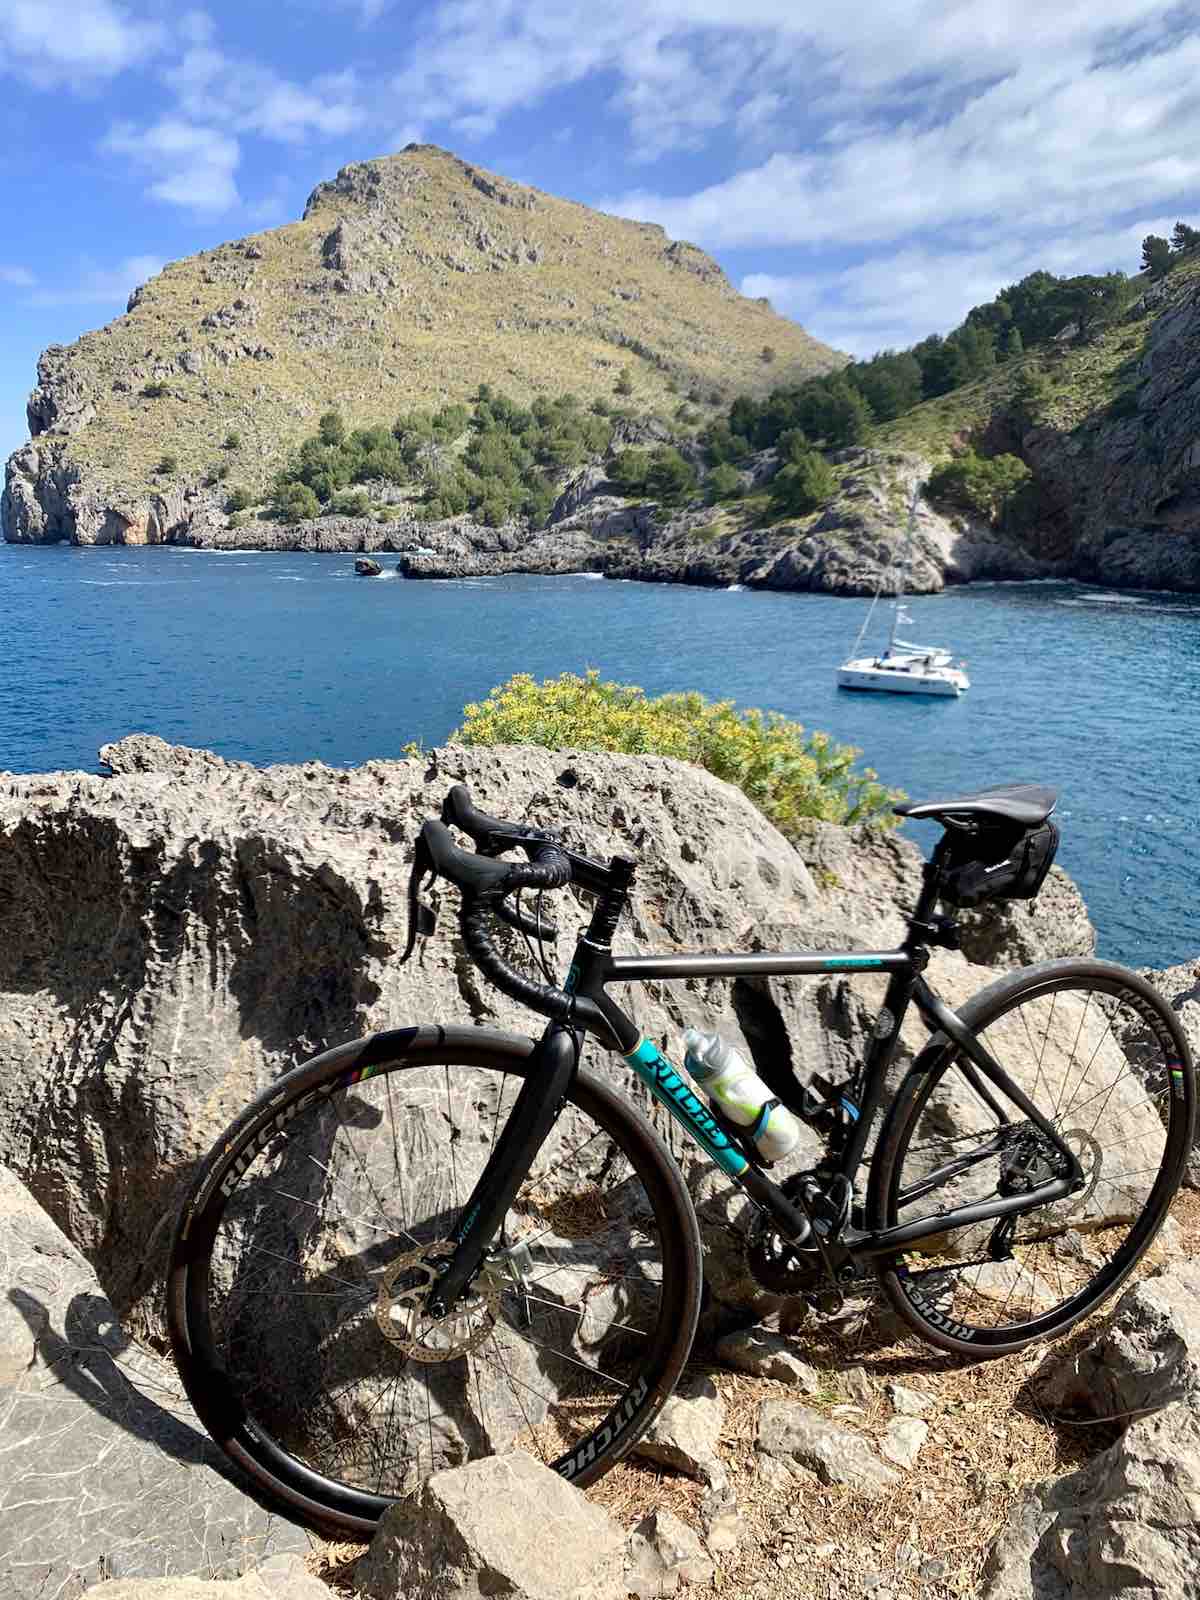 bikerumor pic of the day Ritchey bicycle at the Port of Sa Calobra, Mallorca, Spain.